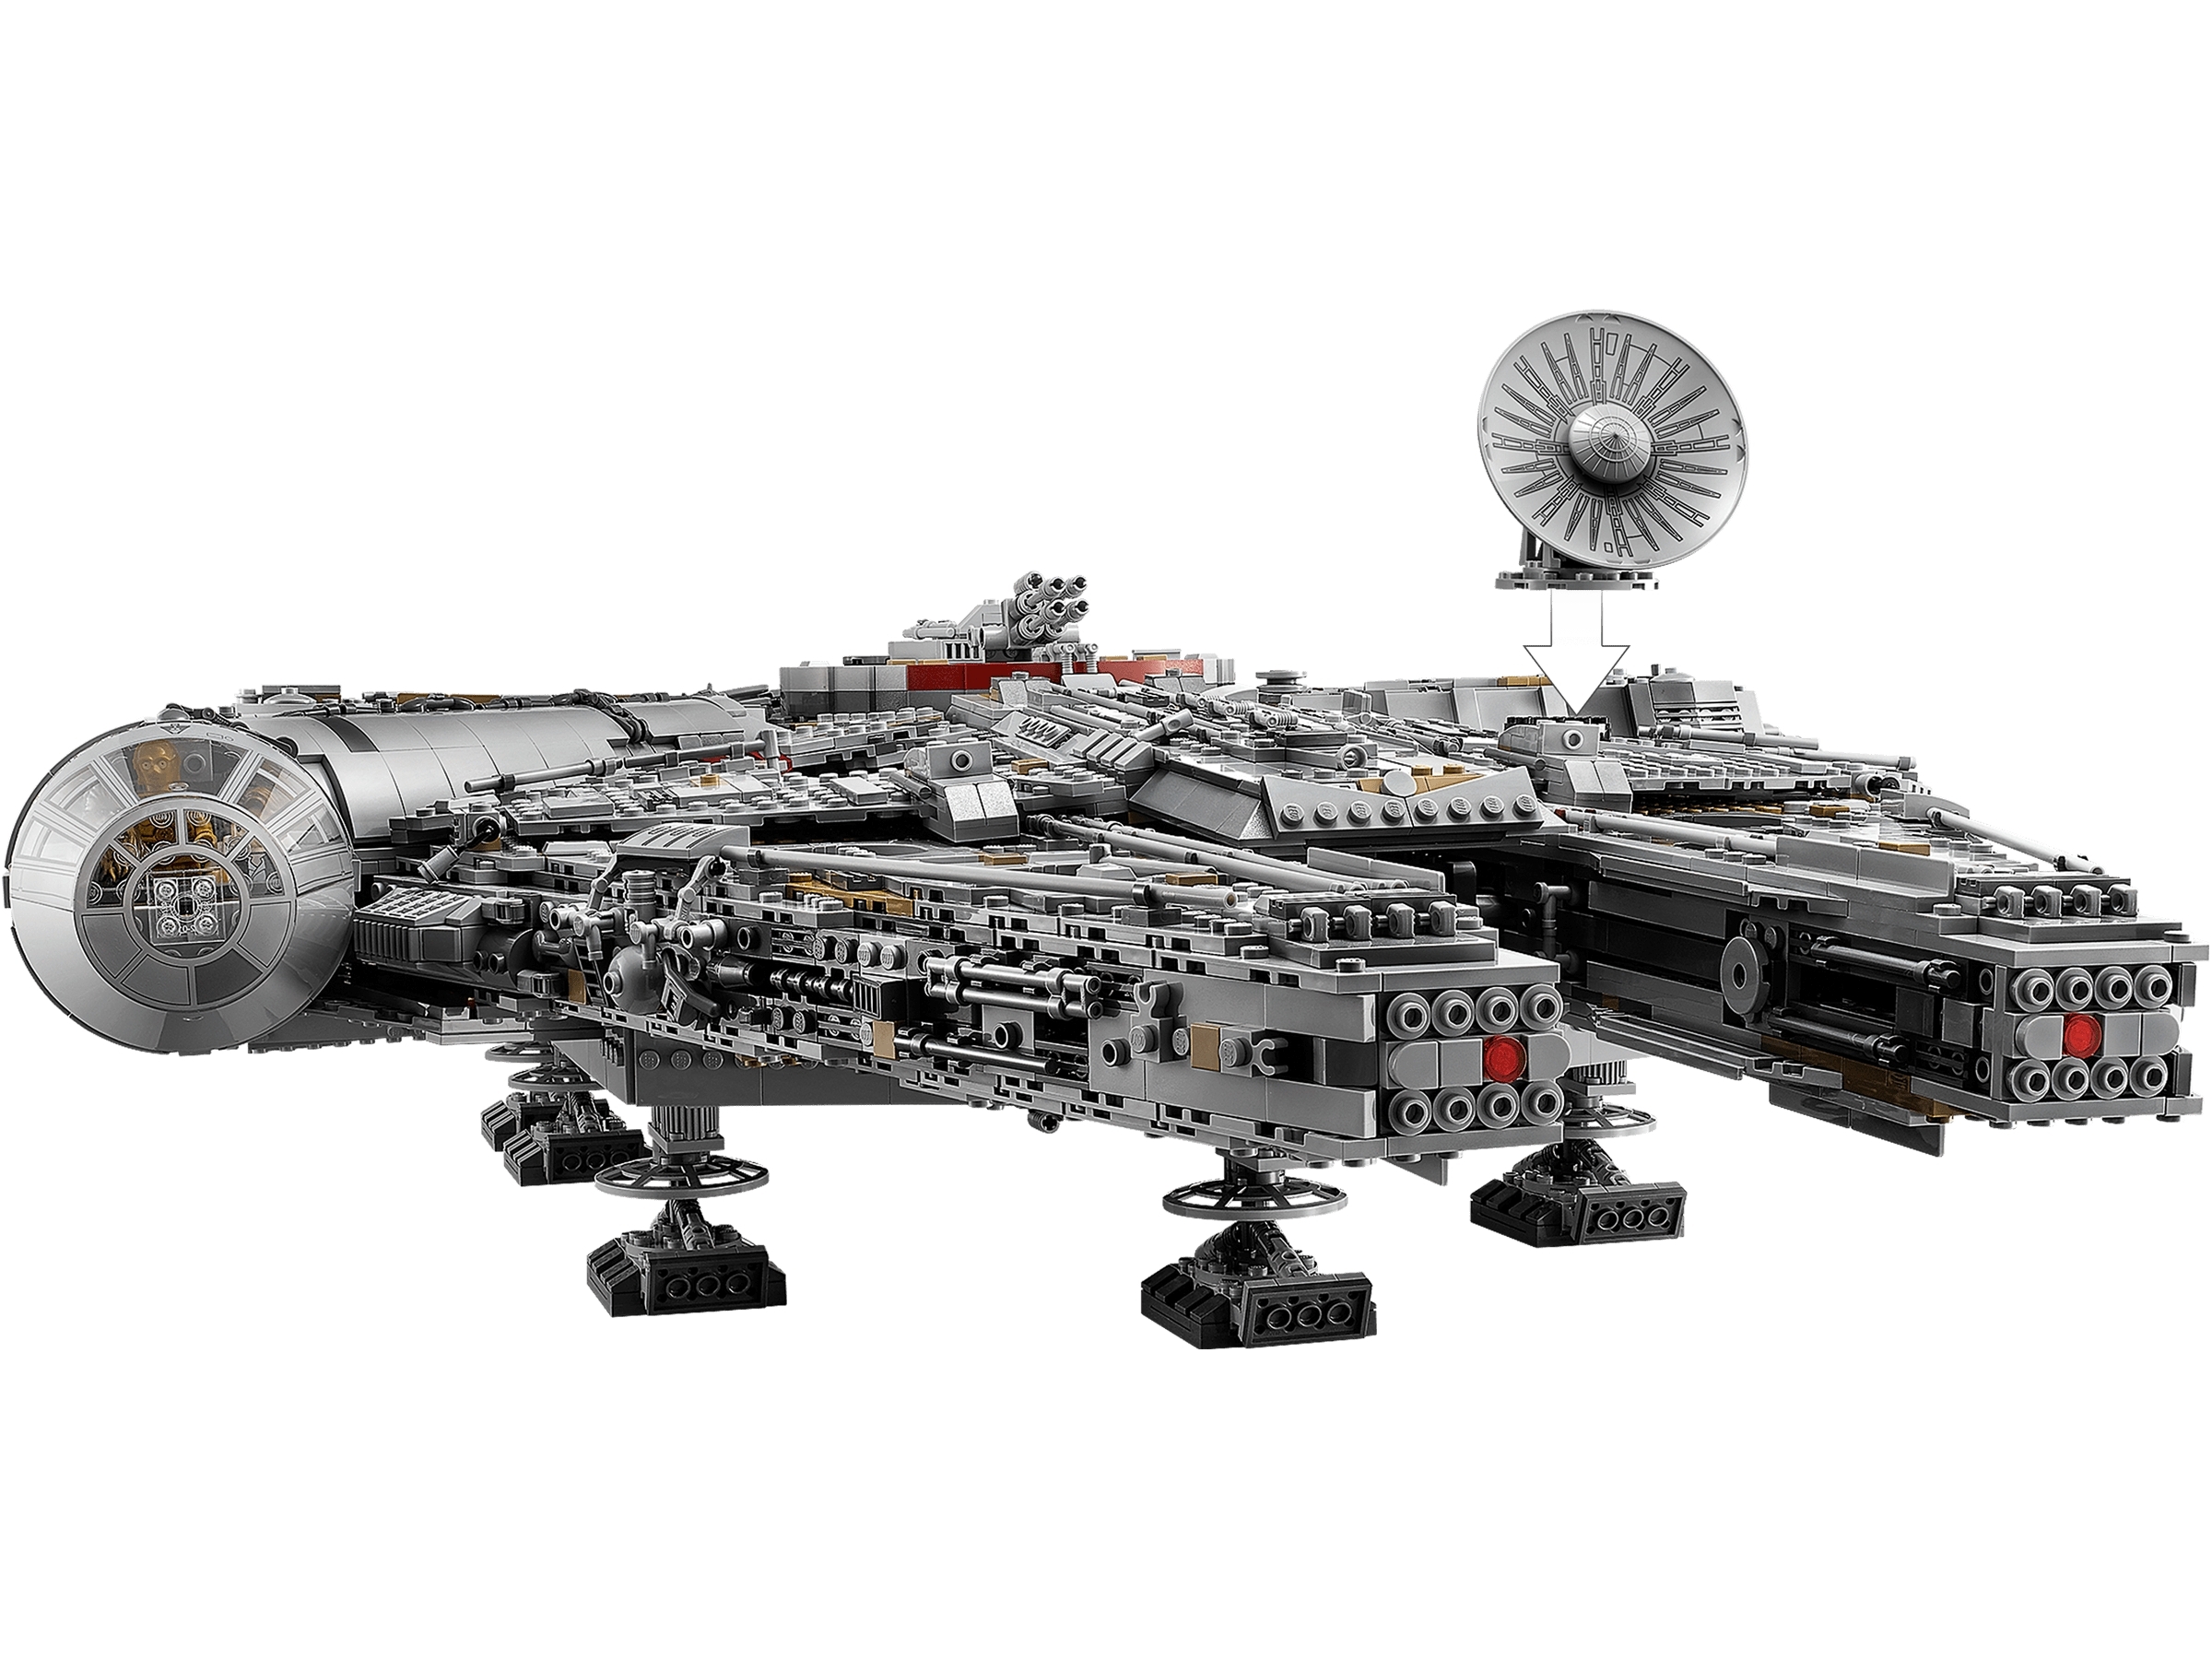  LEGO Star Wars Ultimate Millennium Falcon 75192